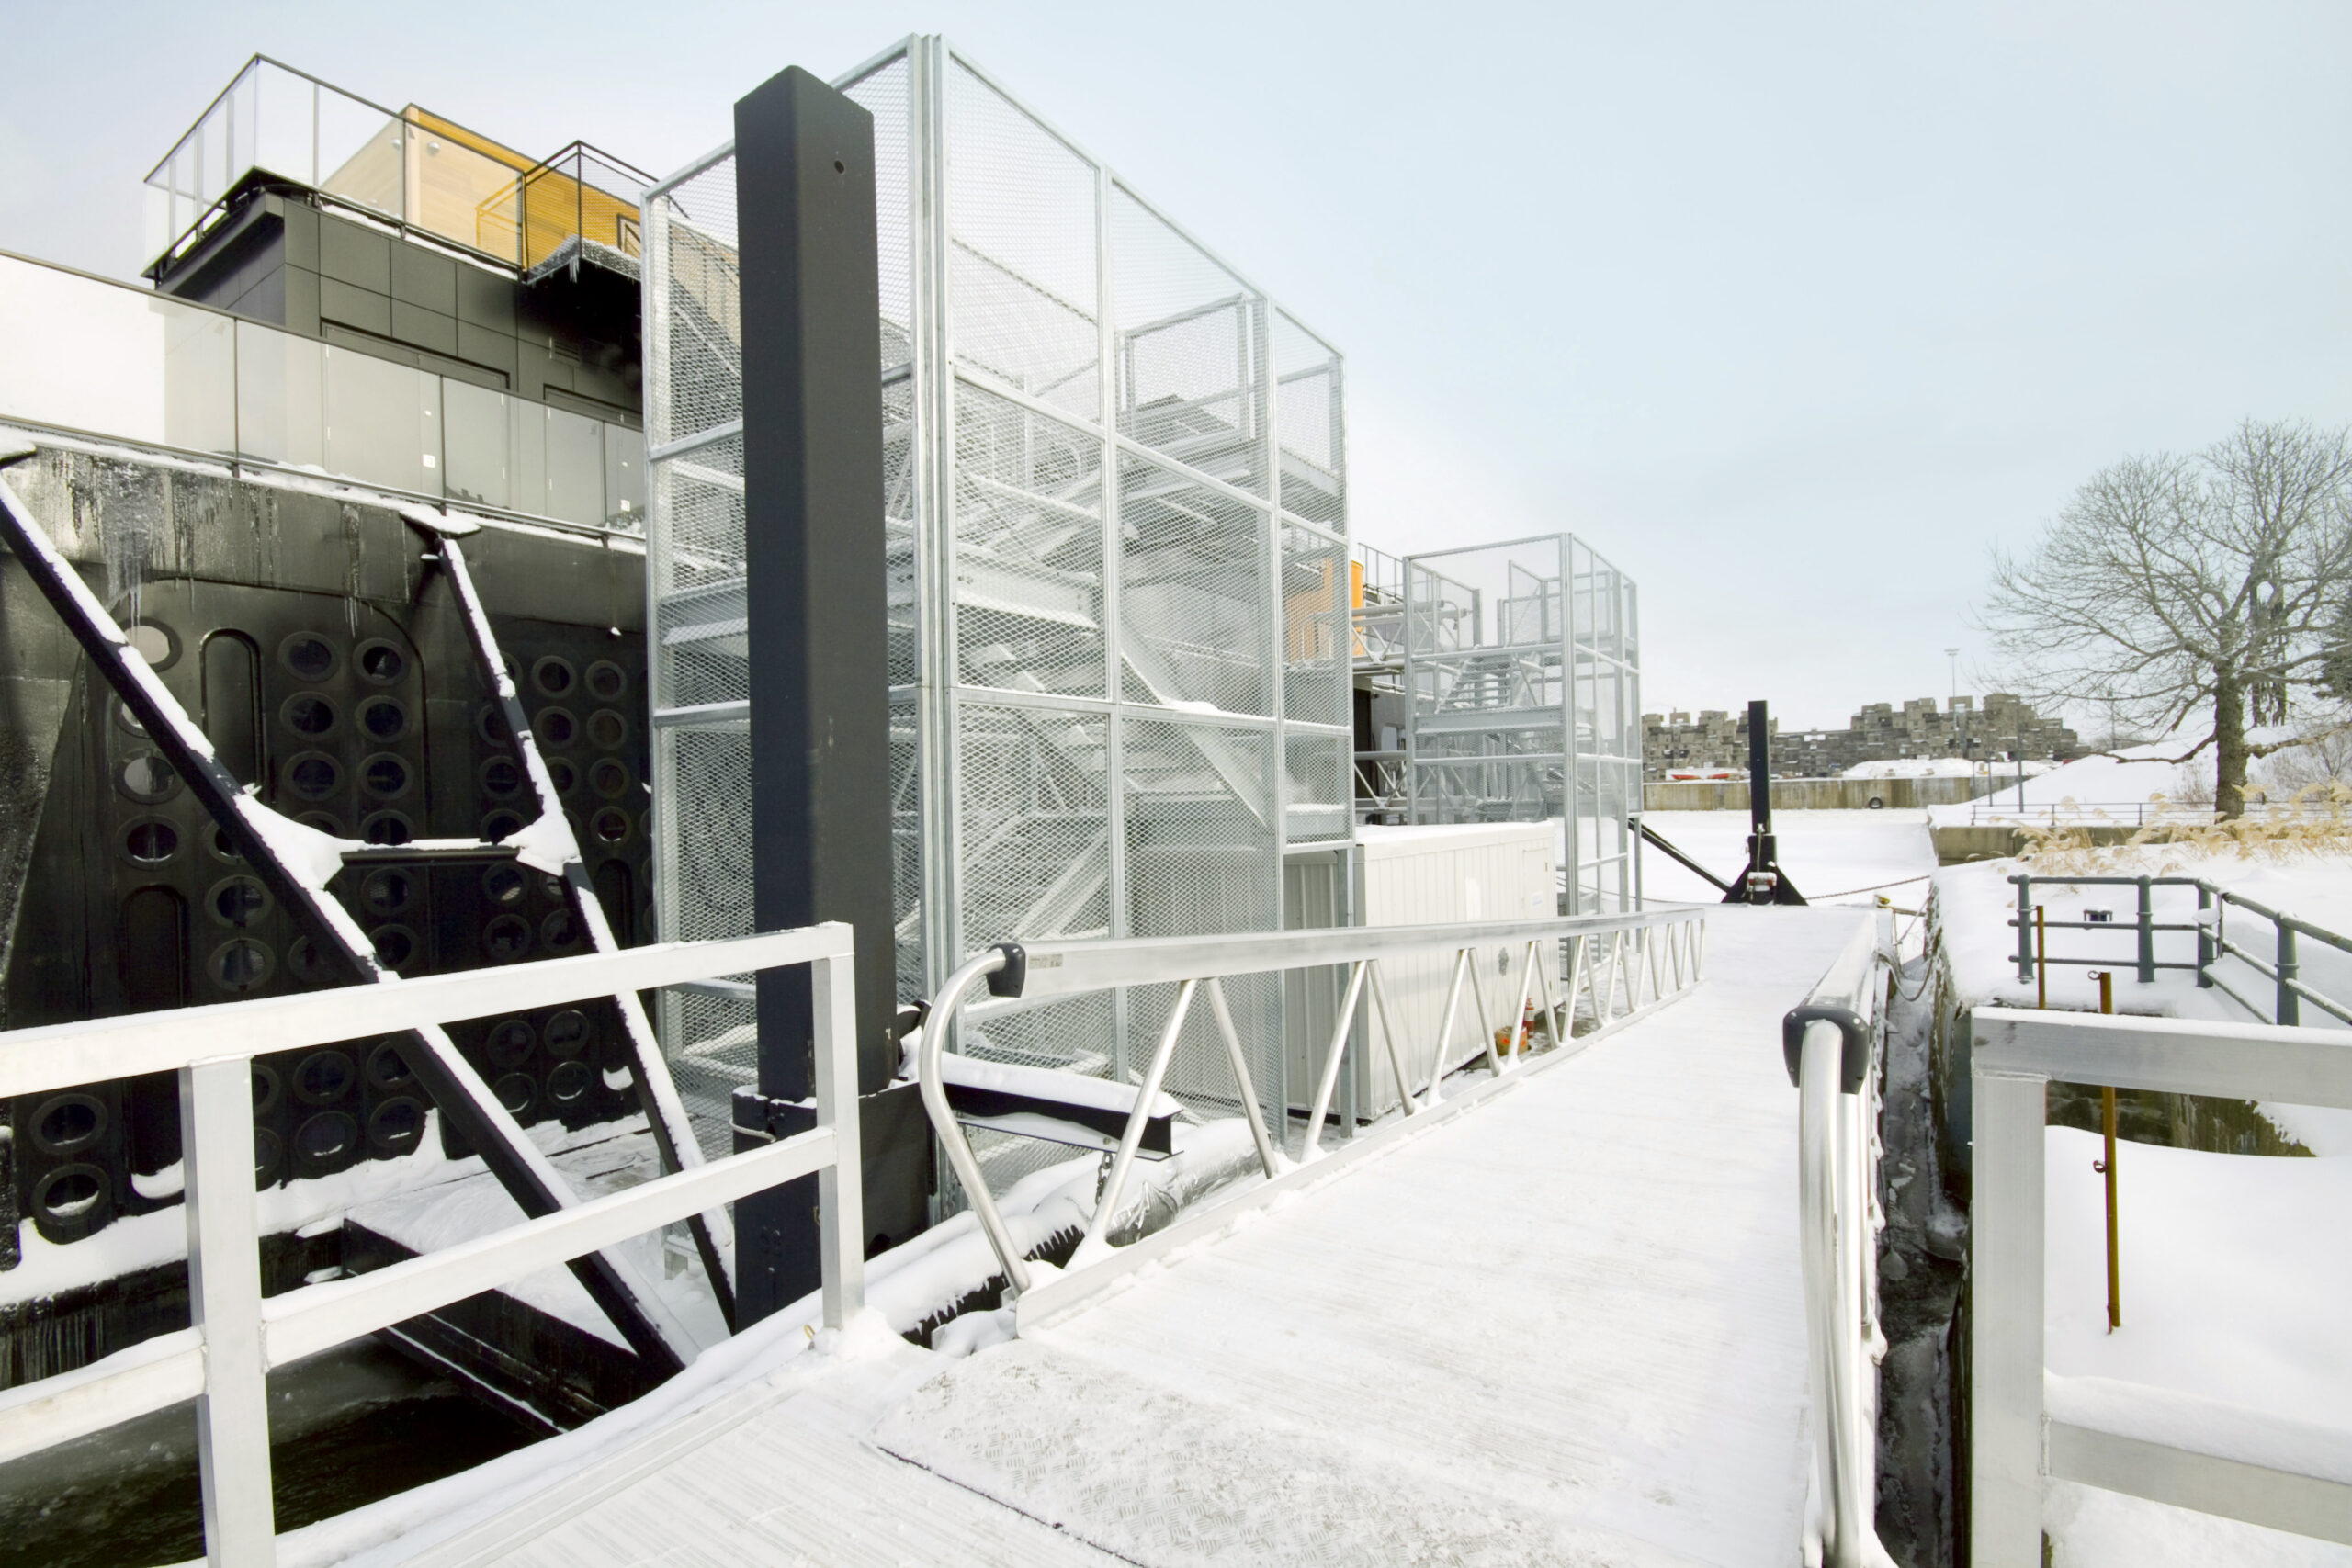 MakeABridge® aluminum gangway kit in snow at Bota-Bota spa in Montreal, Canada